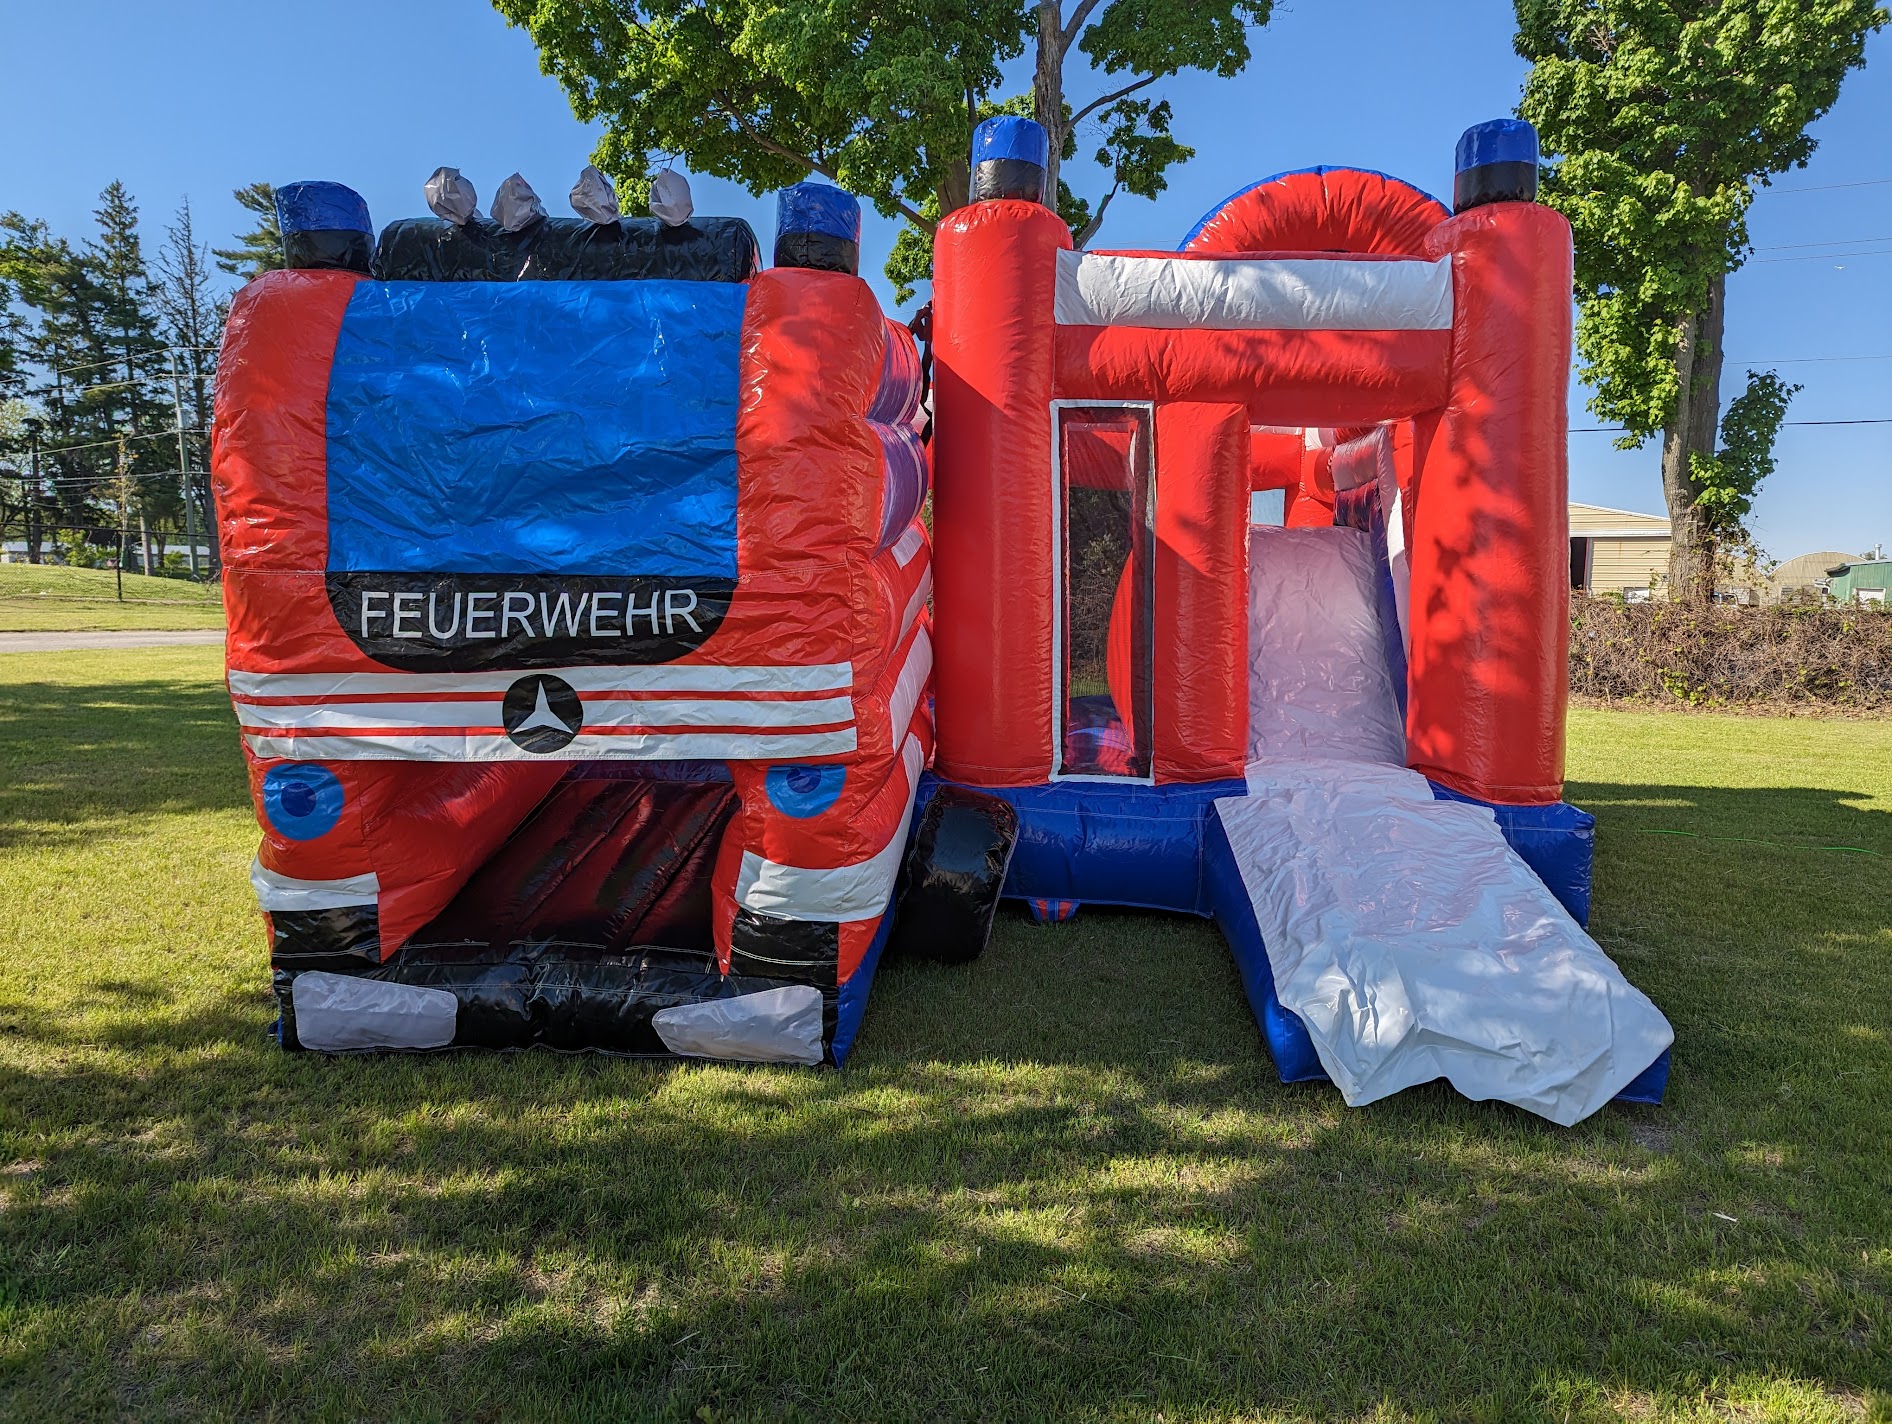 Firetruck bouncy castle with slide